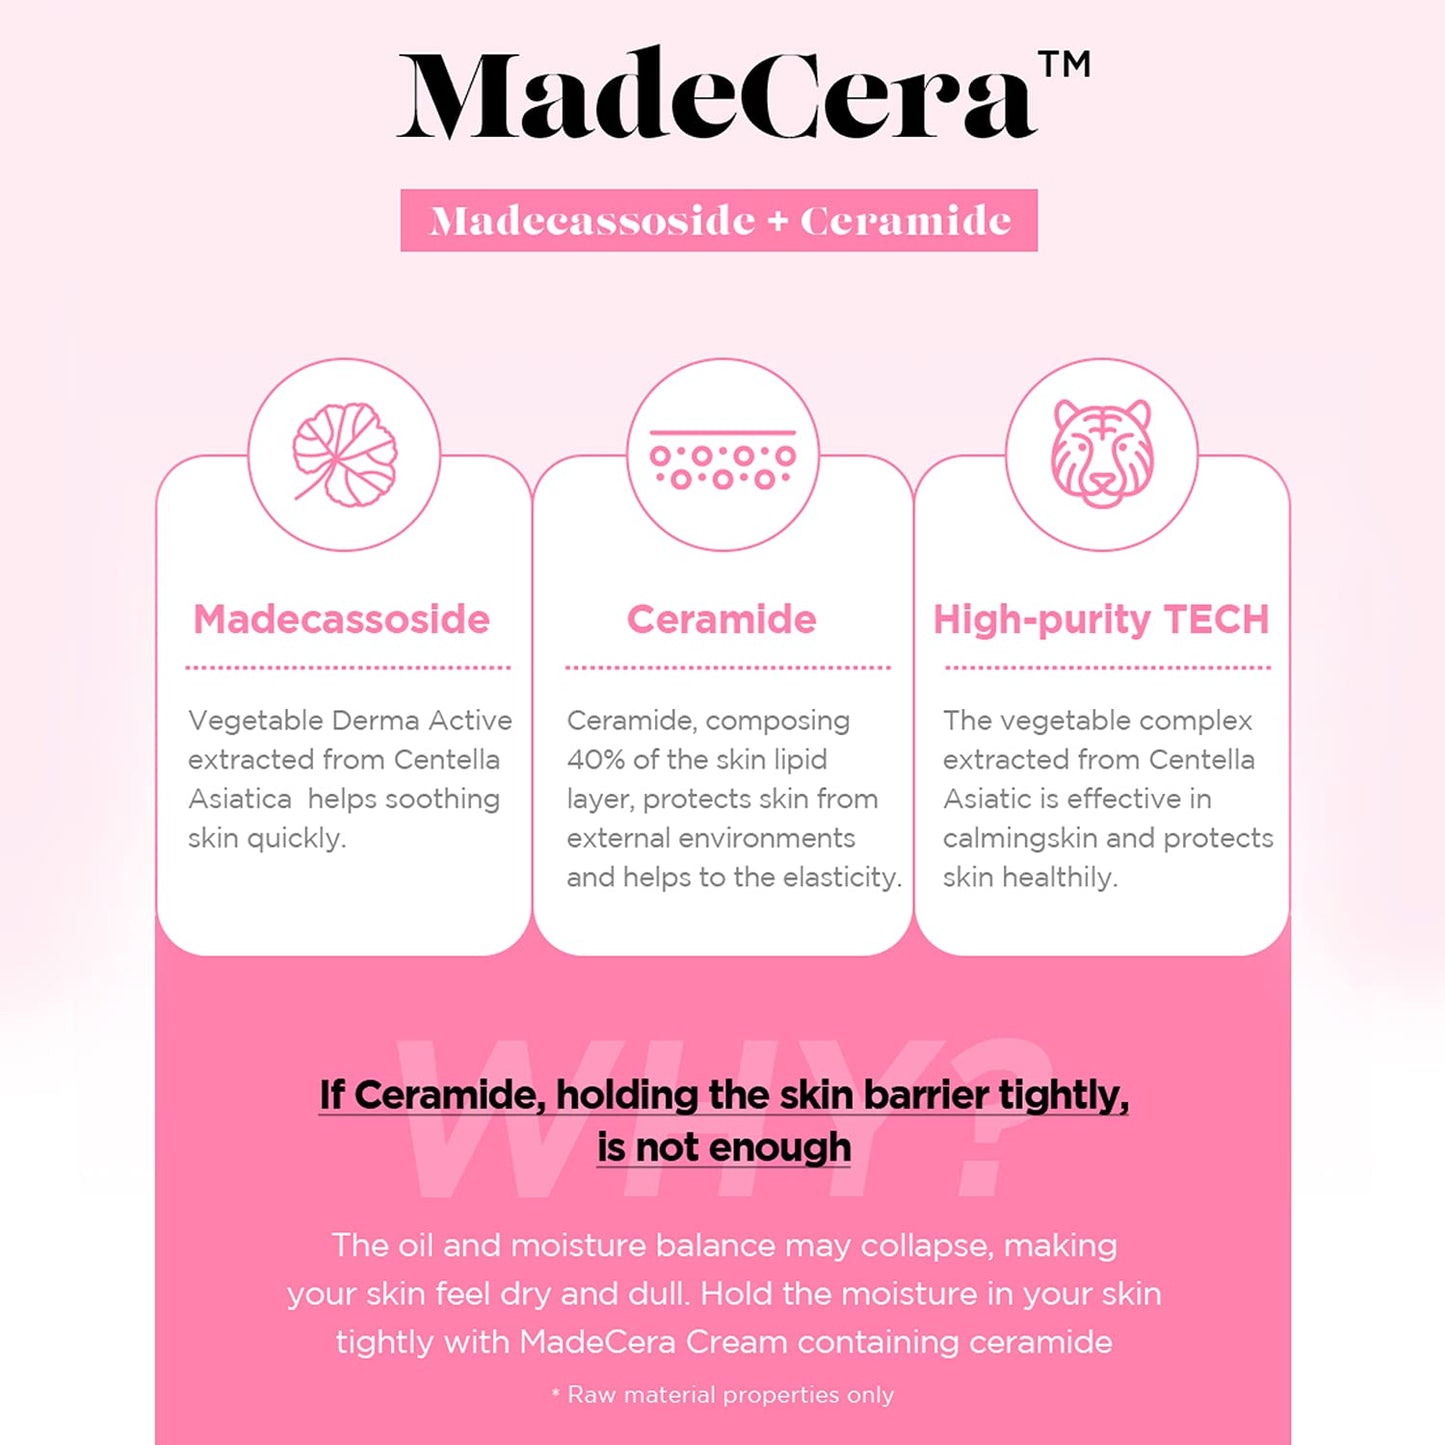 SKINRxLAB Made Cera Cream 50ml (1.69 fl.oz.) - Acne and Redness Relief Face Moisturizer, Sebum Control, Improving Skin Barrier with Ceramide and Madecassoside, Anti-Aging and Pore Minimizing Face Cream